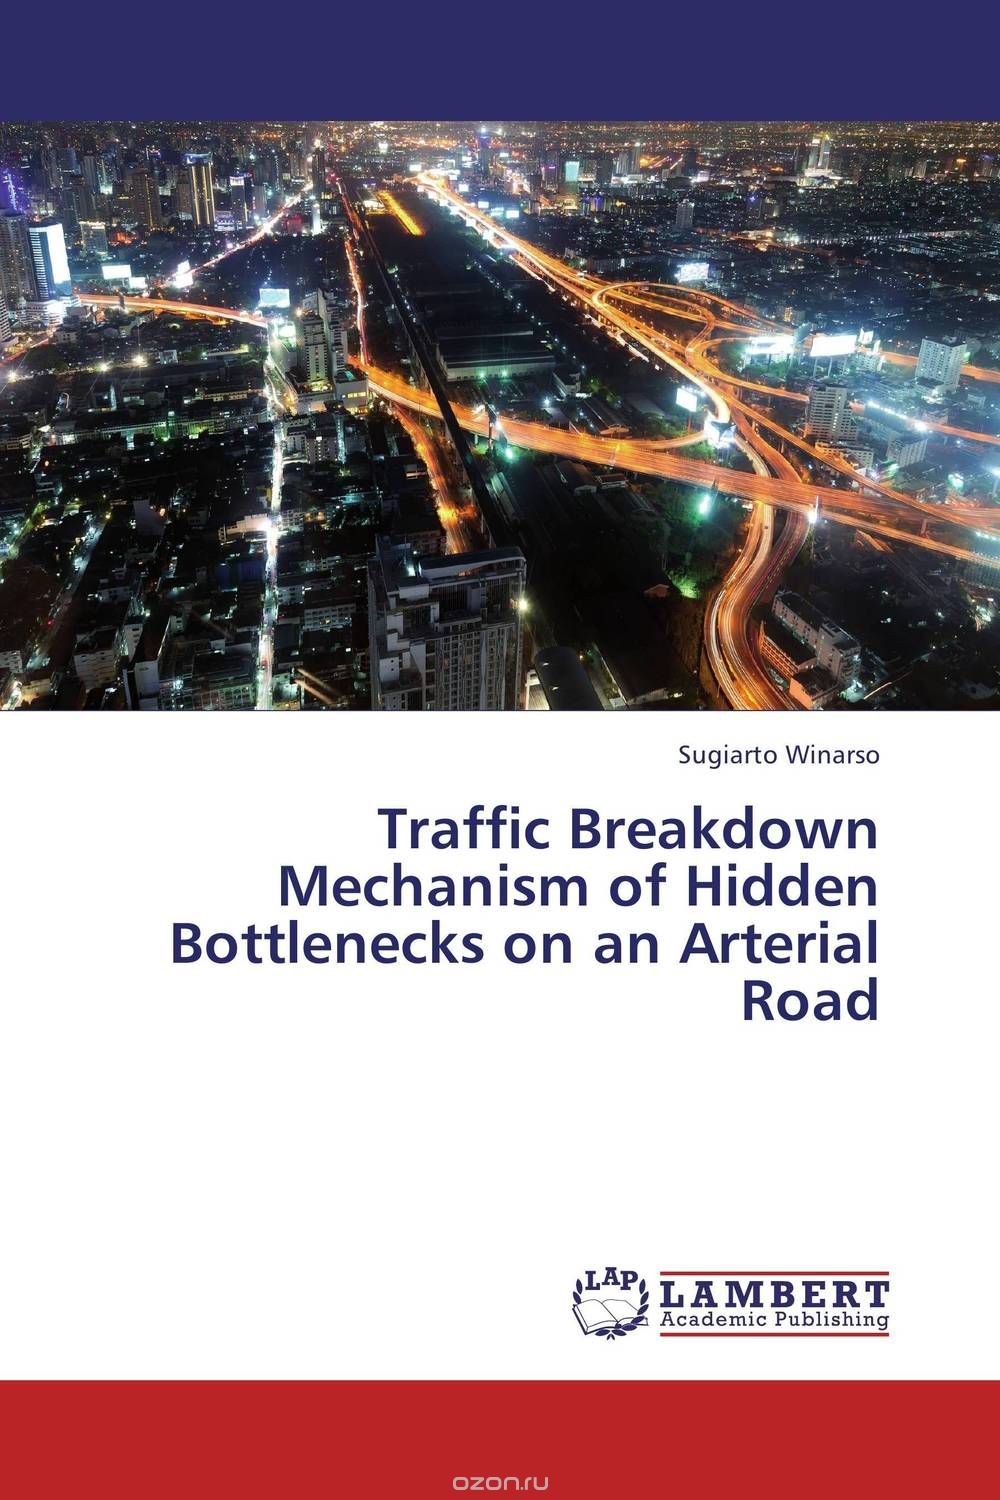 Traffic Breakdown Mechanism of Hidden Bottlenecks on an Arterial Road